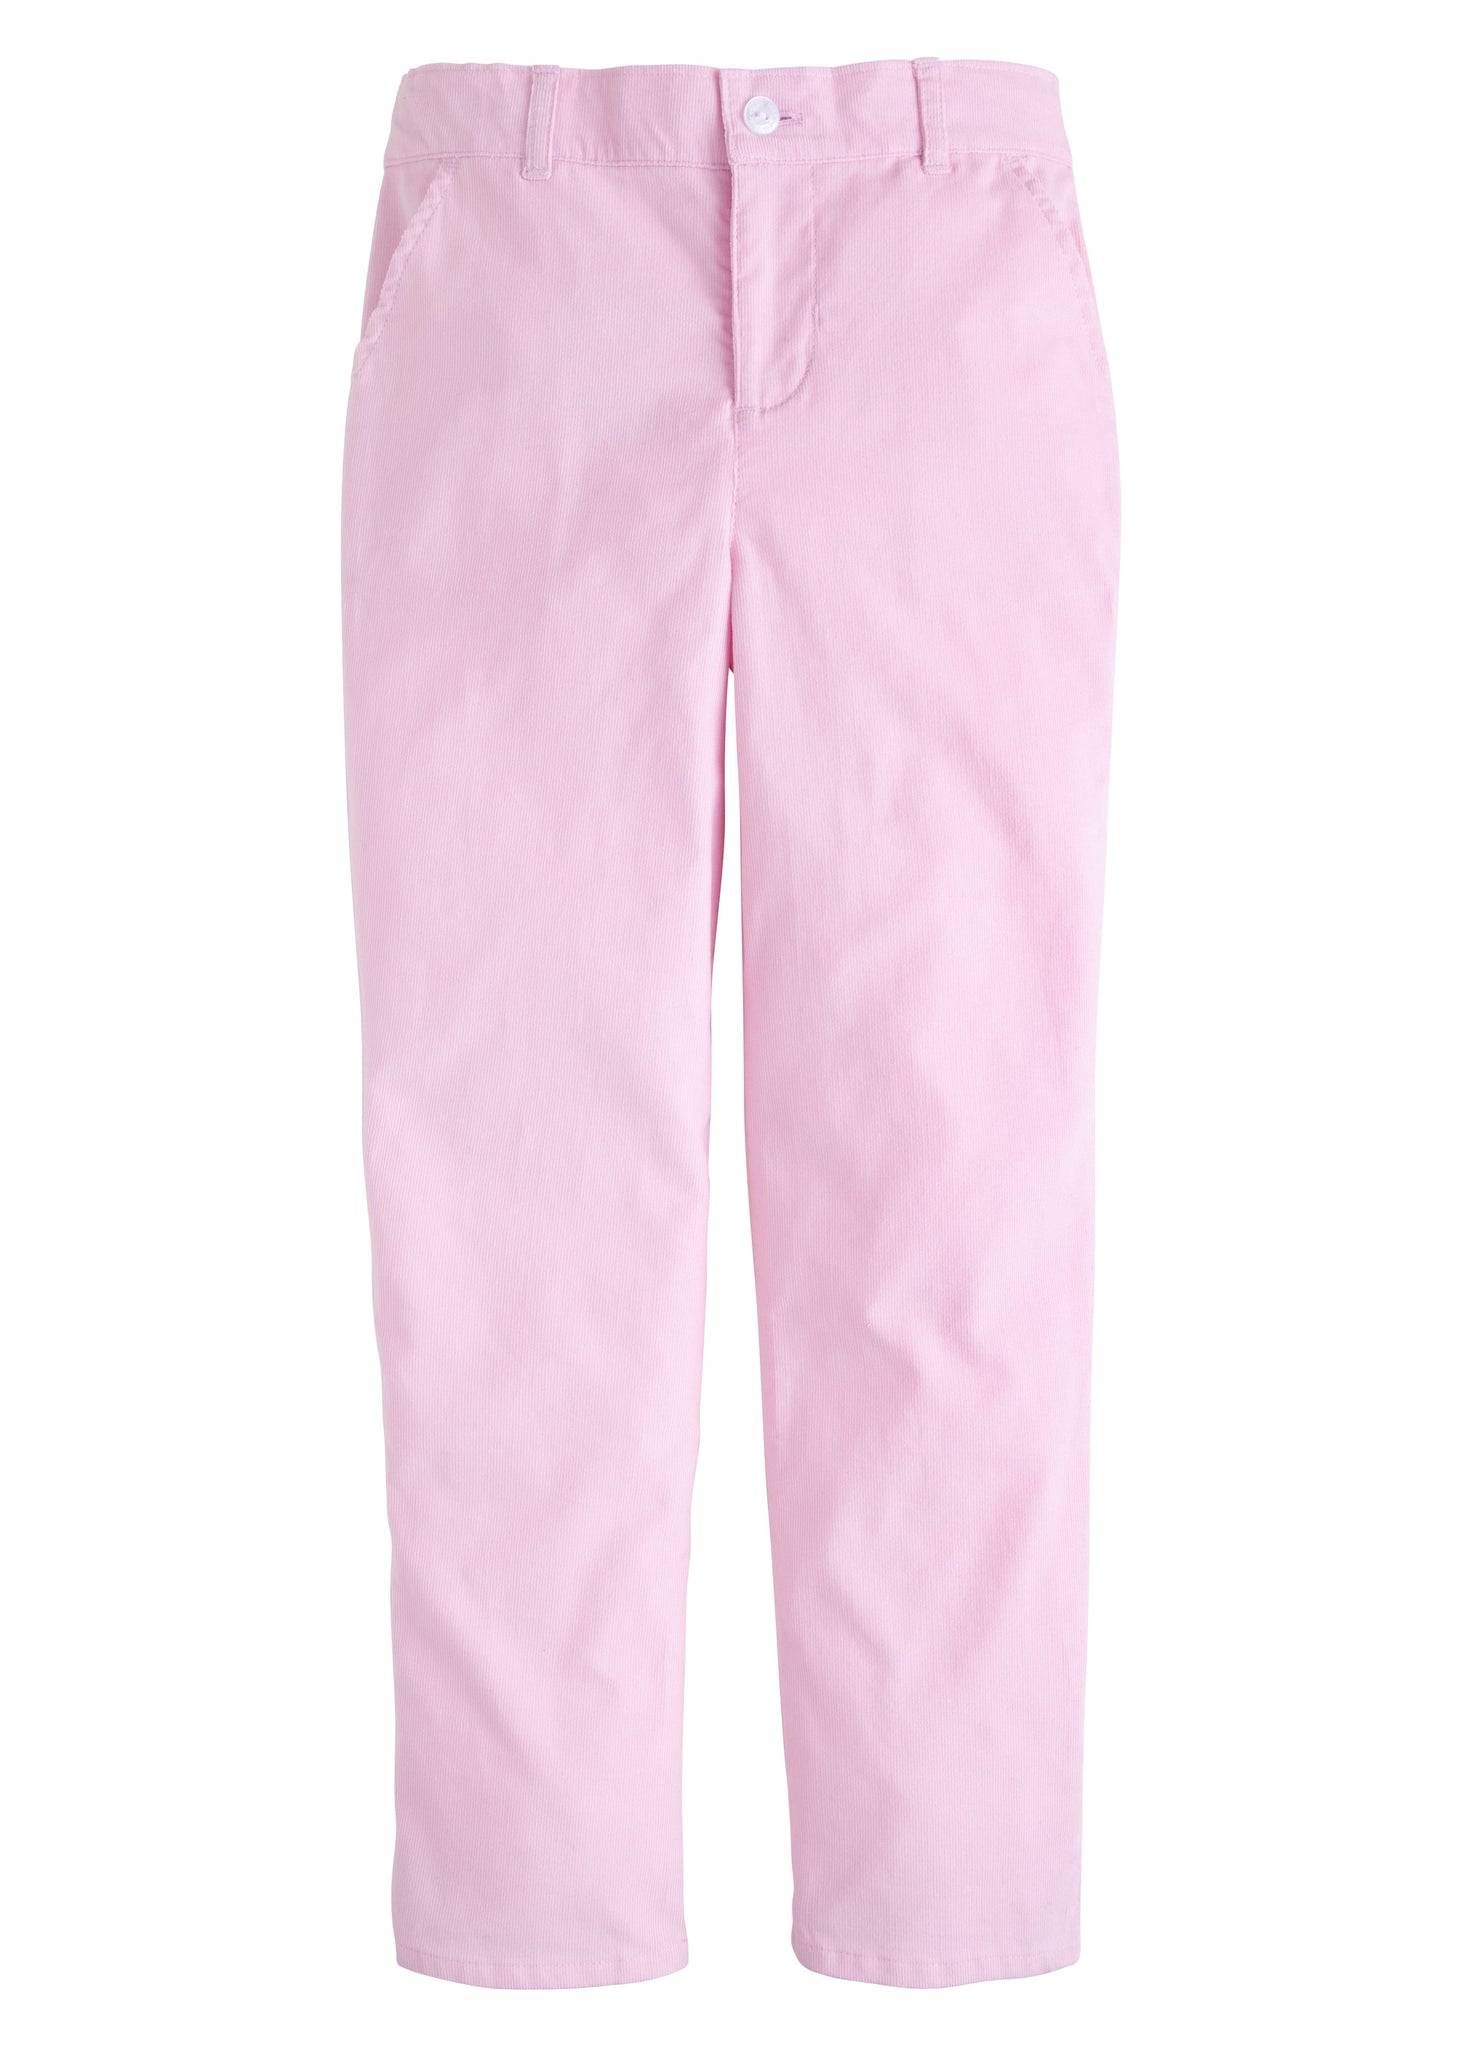 Skinny Pant - Light Pink Corduroy (10)